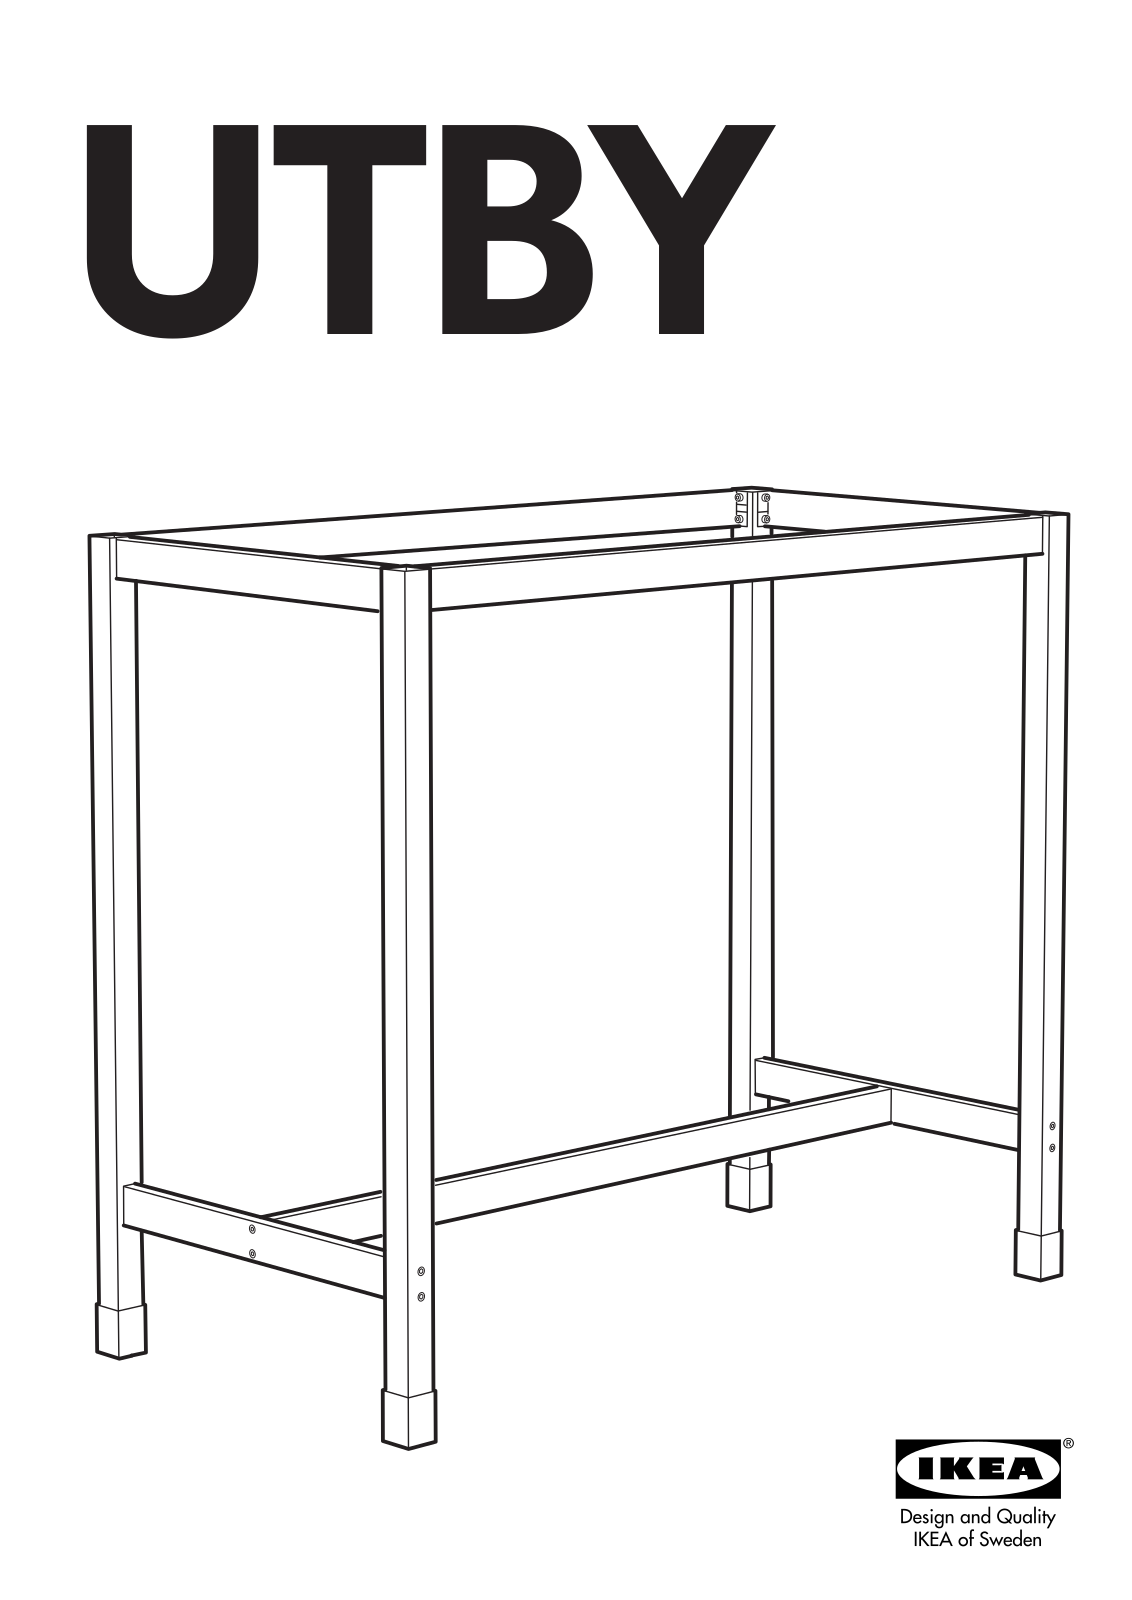 IKEA UTBY UNDER FRAME 47 14X23 58X41 38 Assembly Instruction